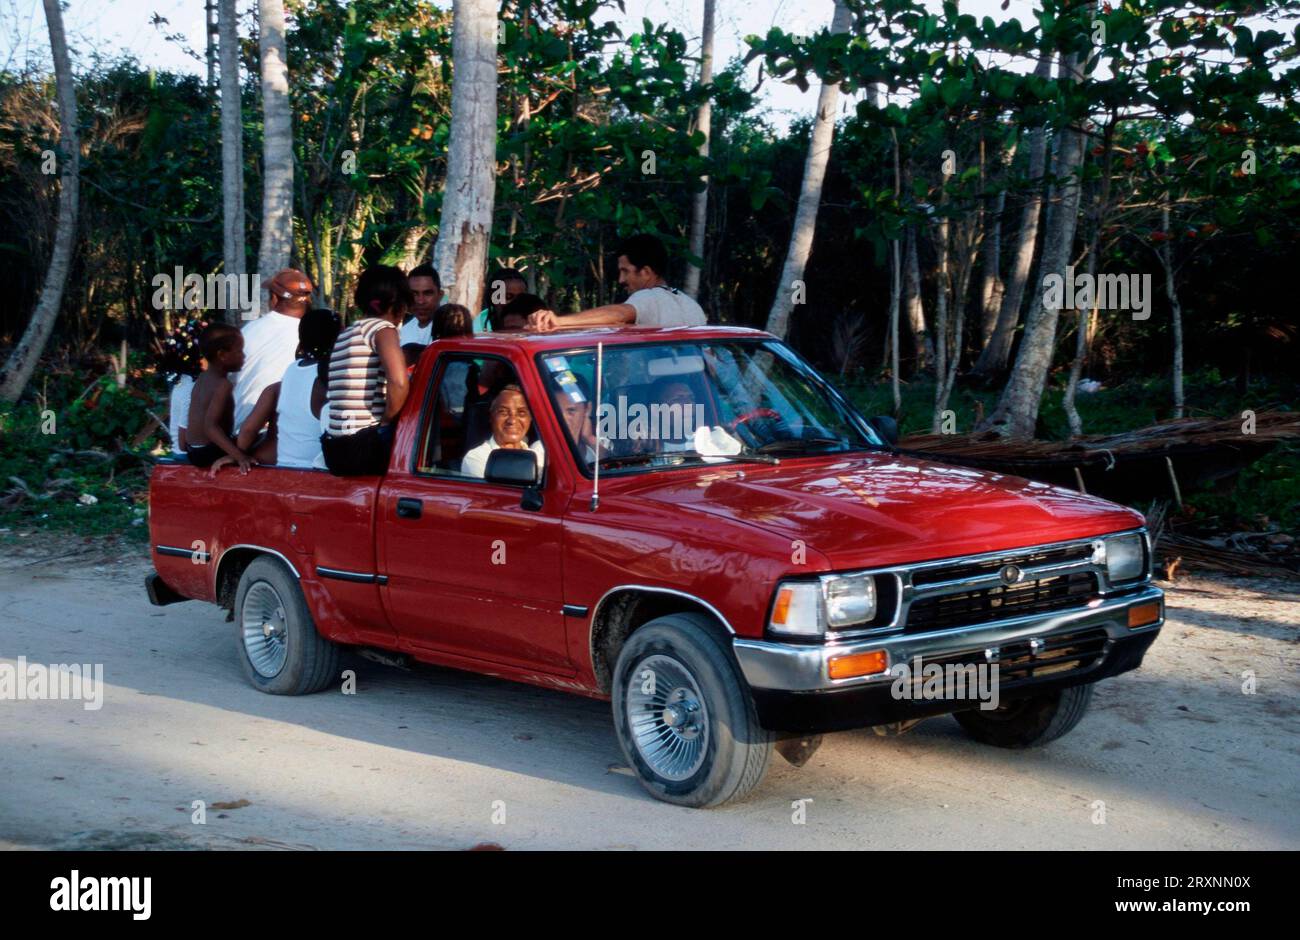 People in the car, Las Galeras, Samana, Dominican Republic, Caribbean Stock Photo